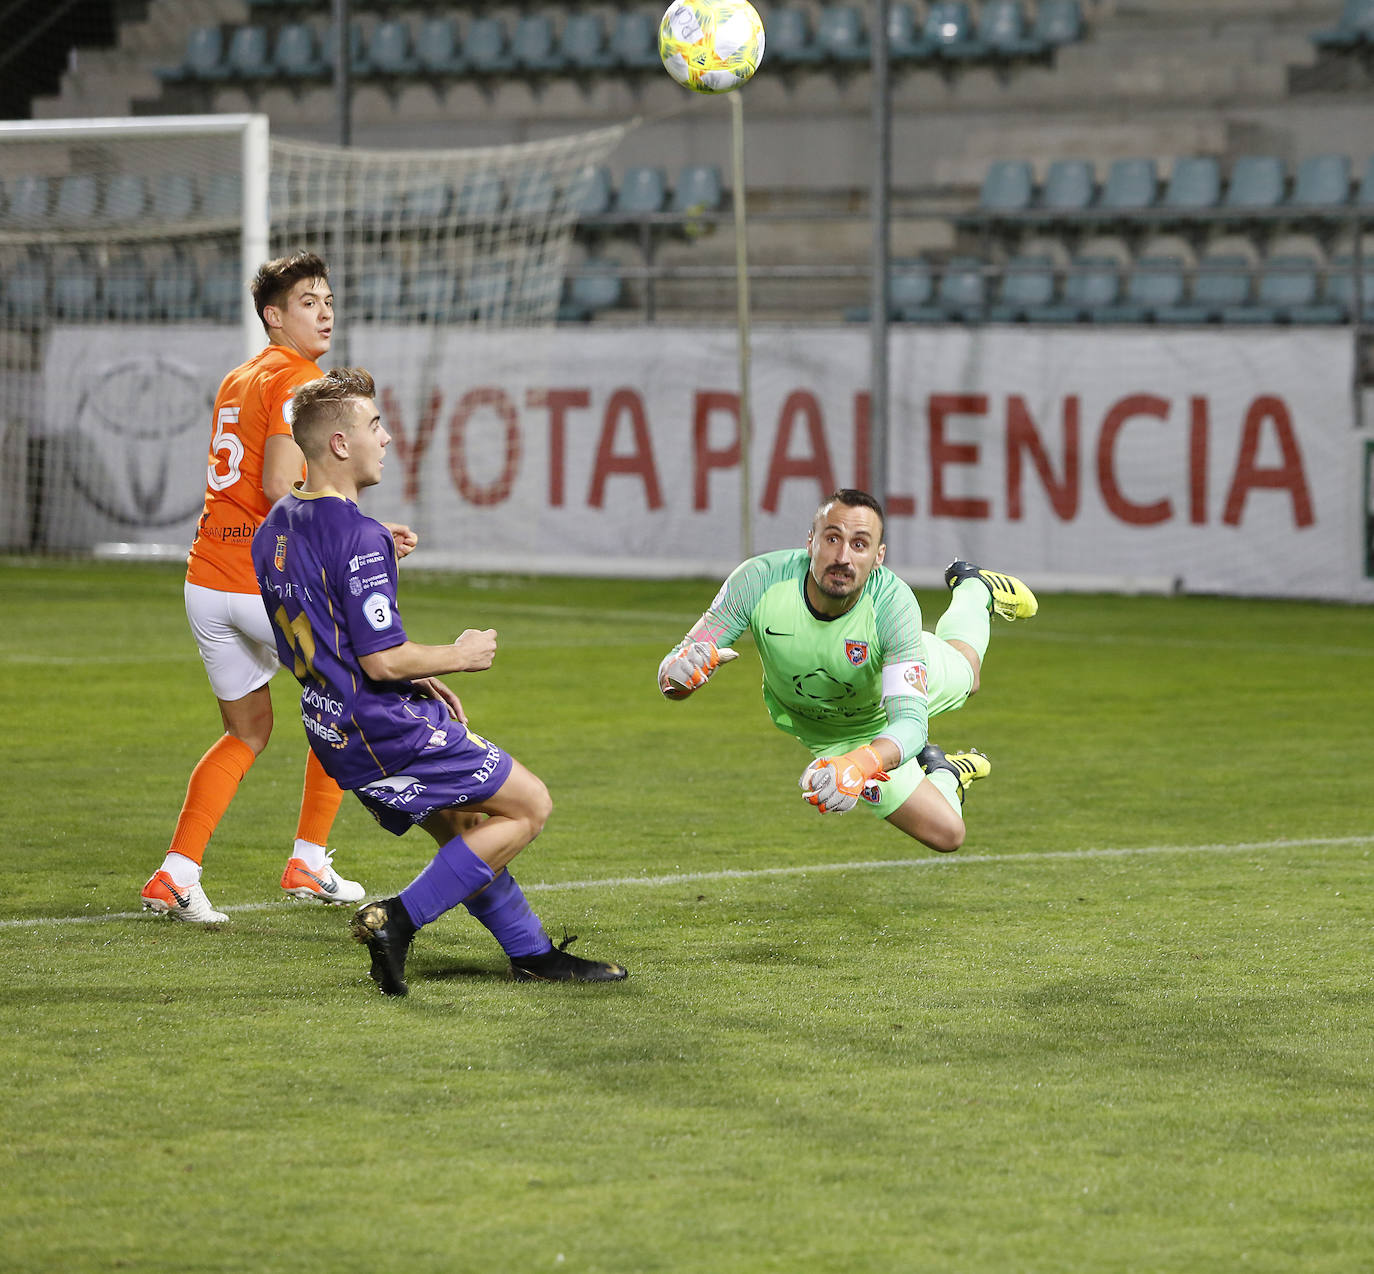 Fotos: Palencia Cristo Atlético 0 - 0 Burgos Promesas